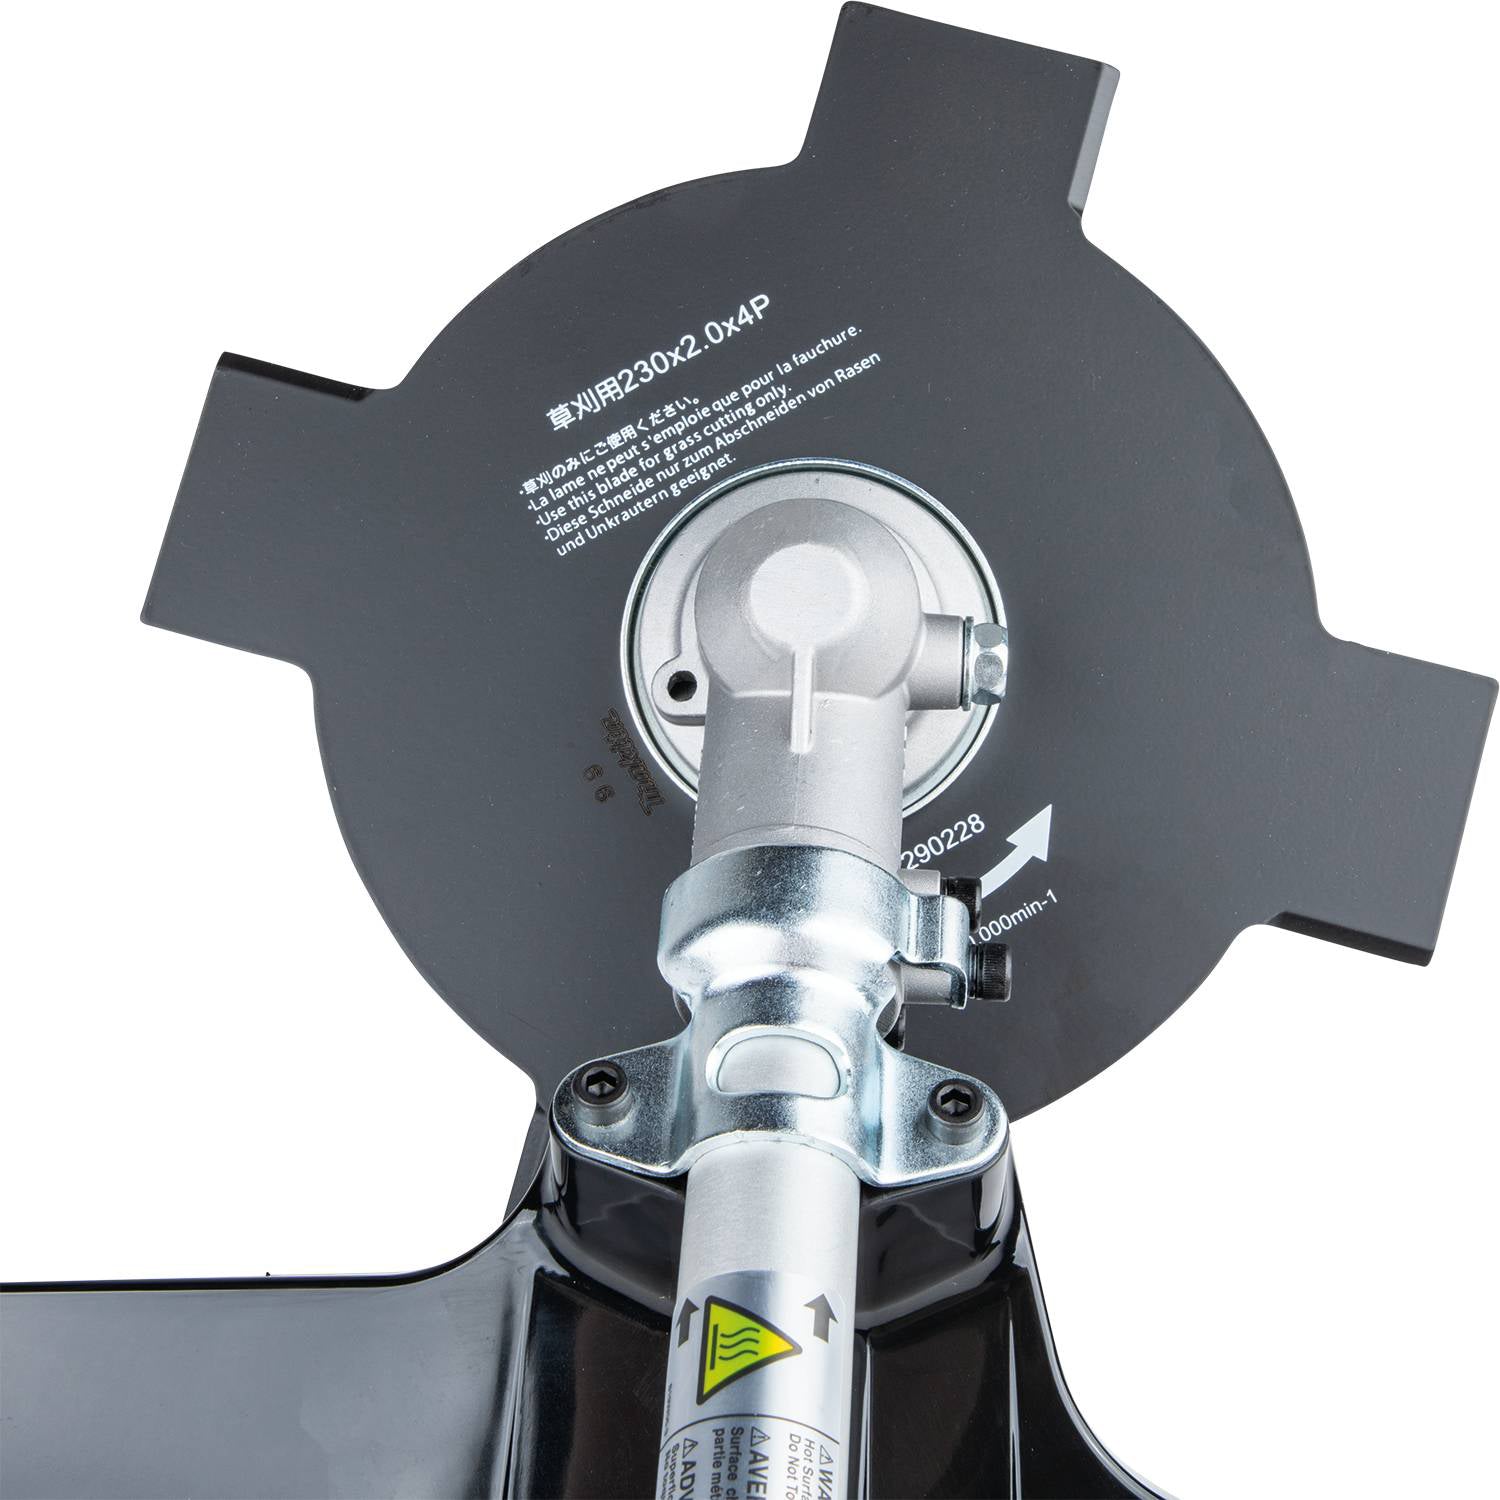 40V Max XGT Lithium-Ion Brushless Cordless Brush Cutter Kit 4.0 Ah